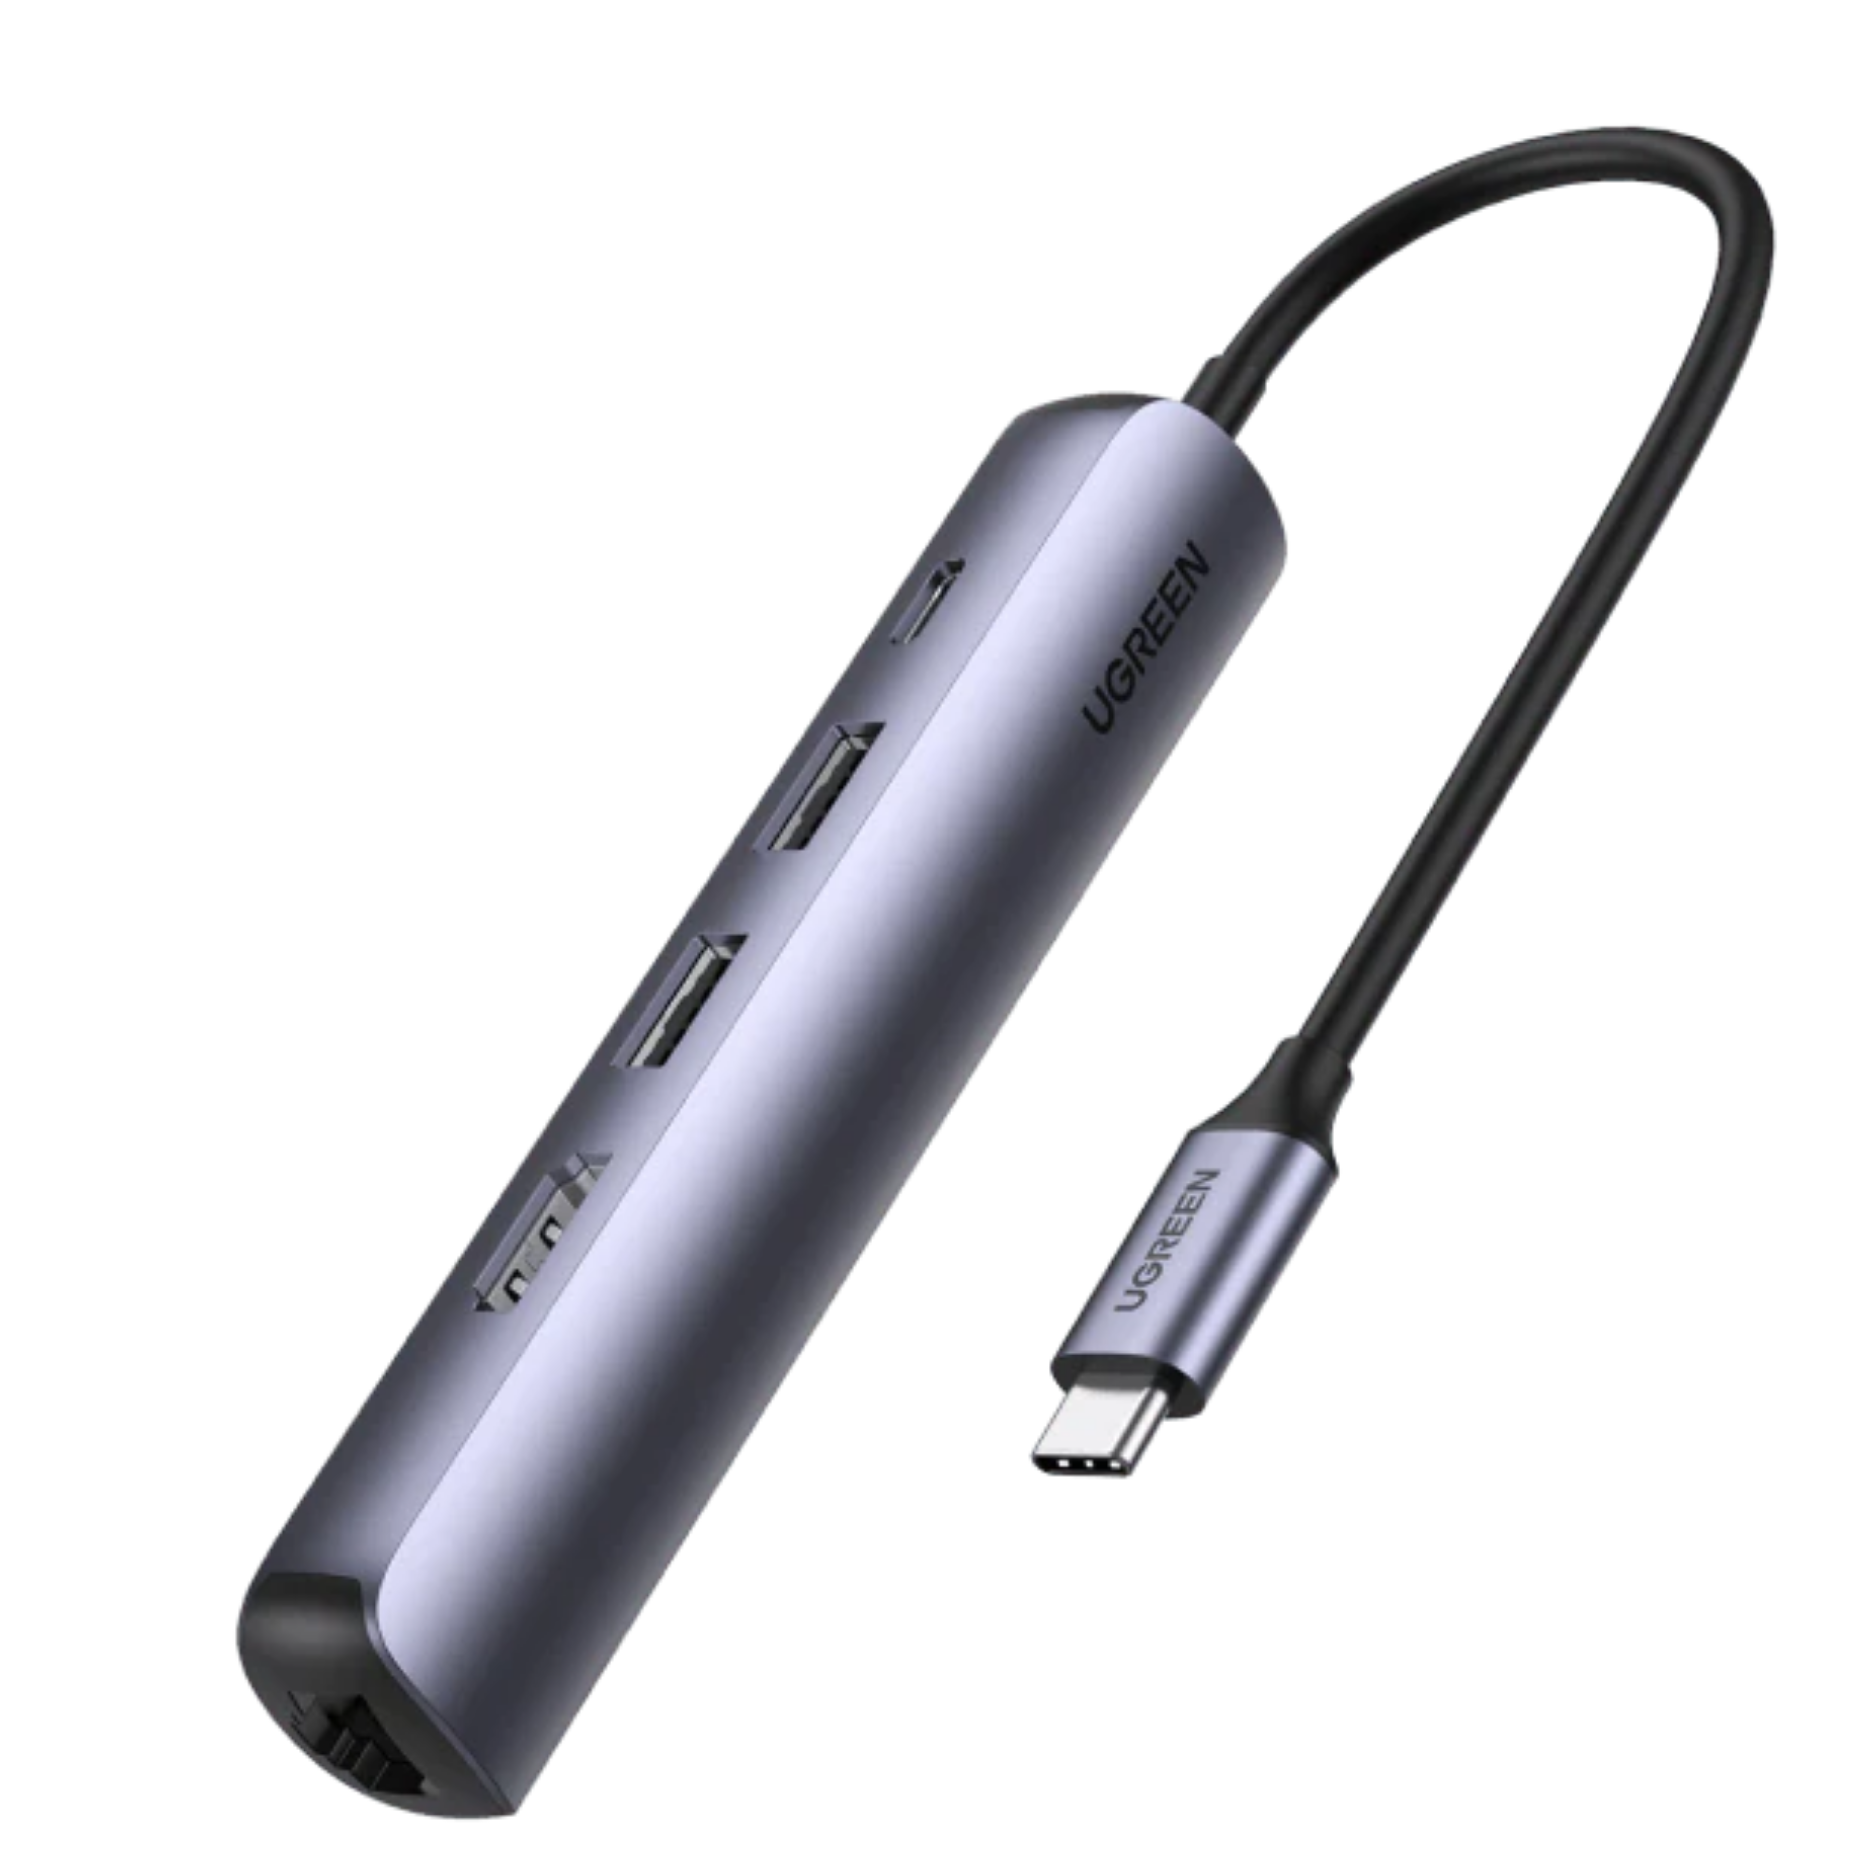 Achetez UGREEN 10916 0,2m USB C Hub 4-Port USB 3.0 Adaptateur 5gbp